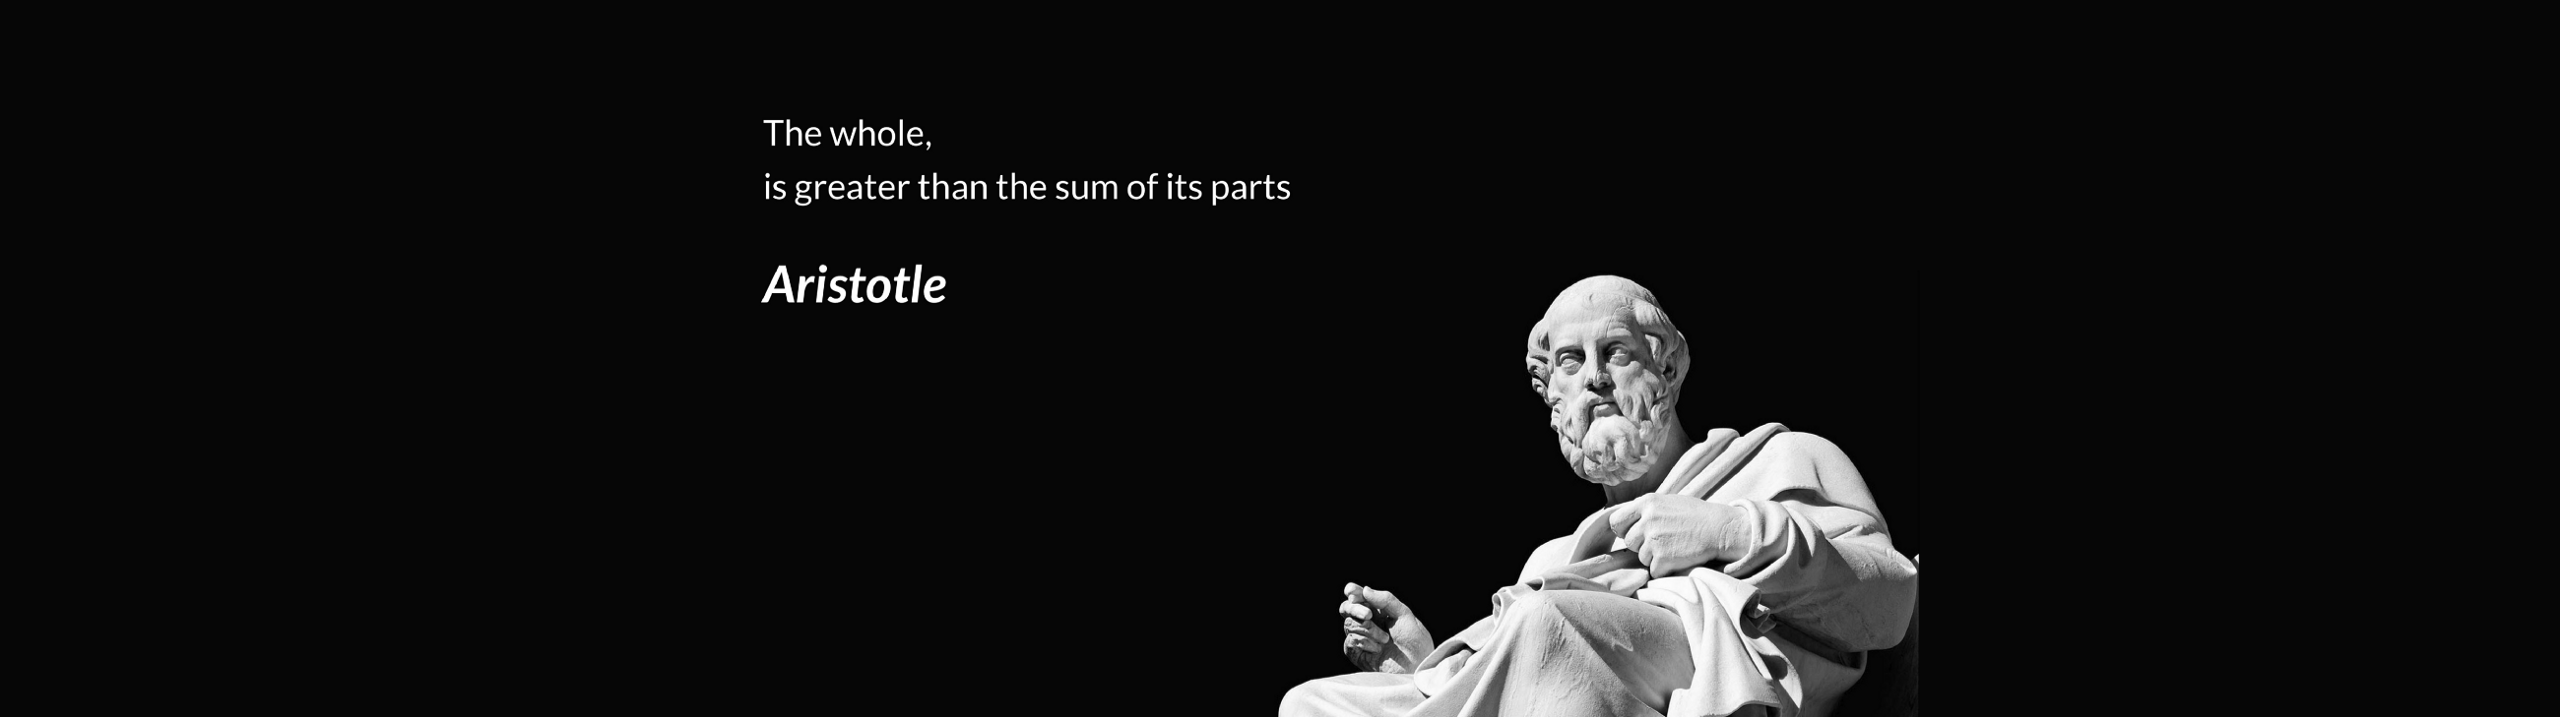 Statue of Aristotle, the Greek philosopher